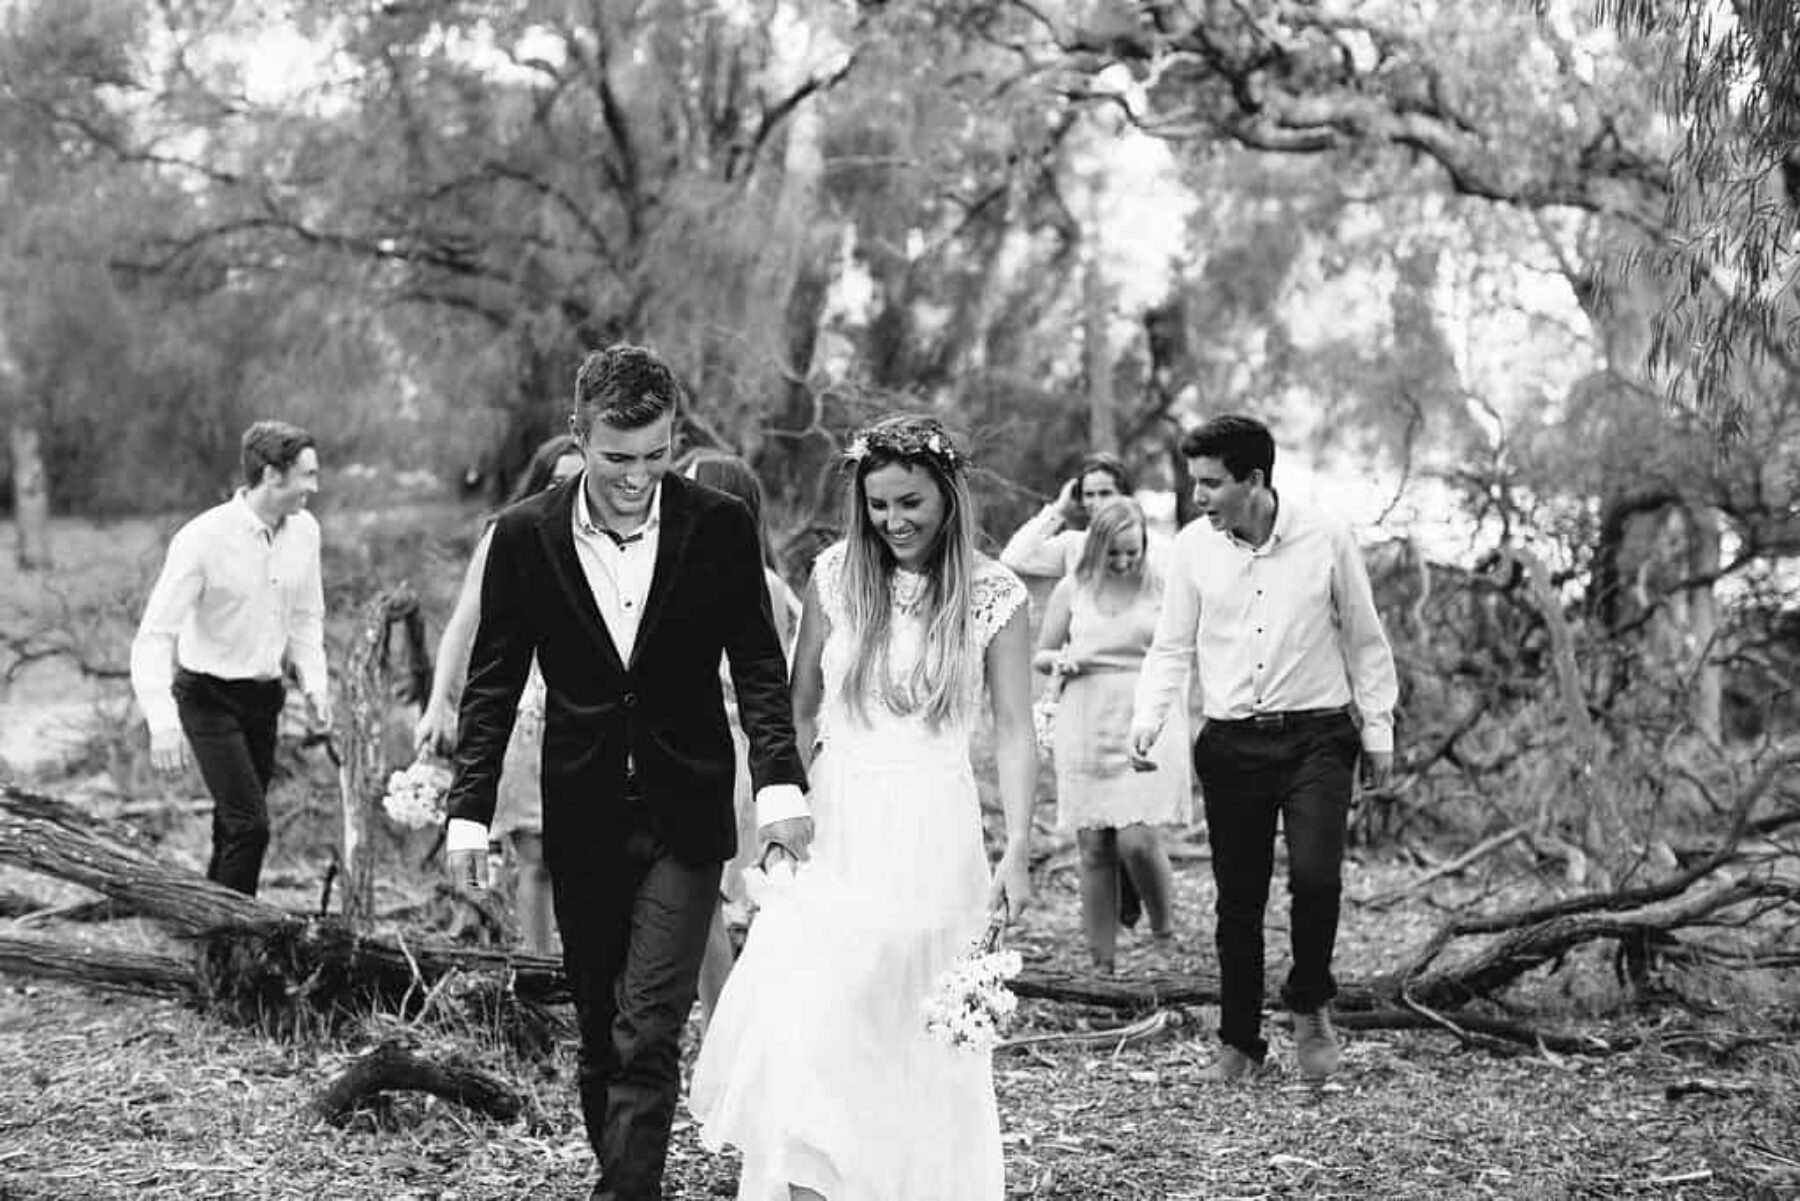 Beach-meets-bush Mandurah wedding - photography by Ryder Evans